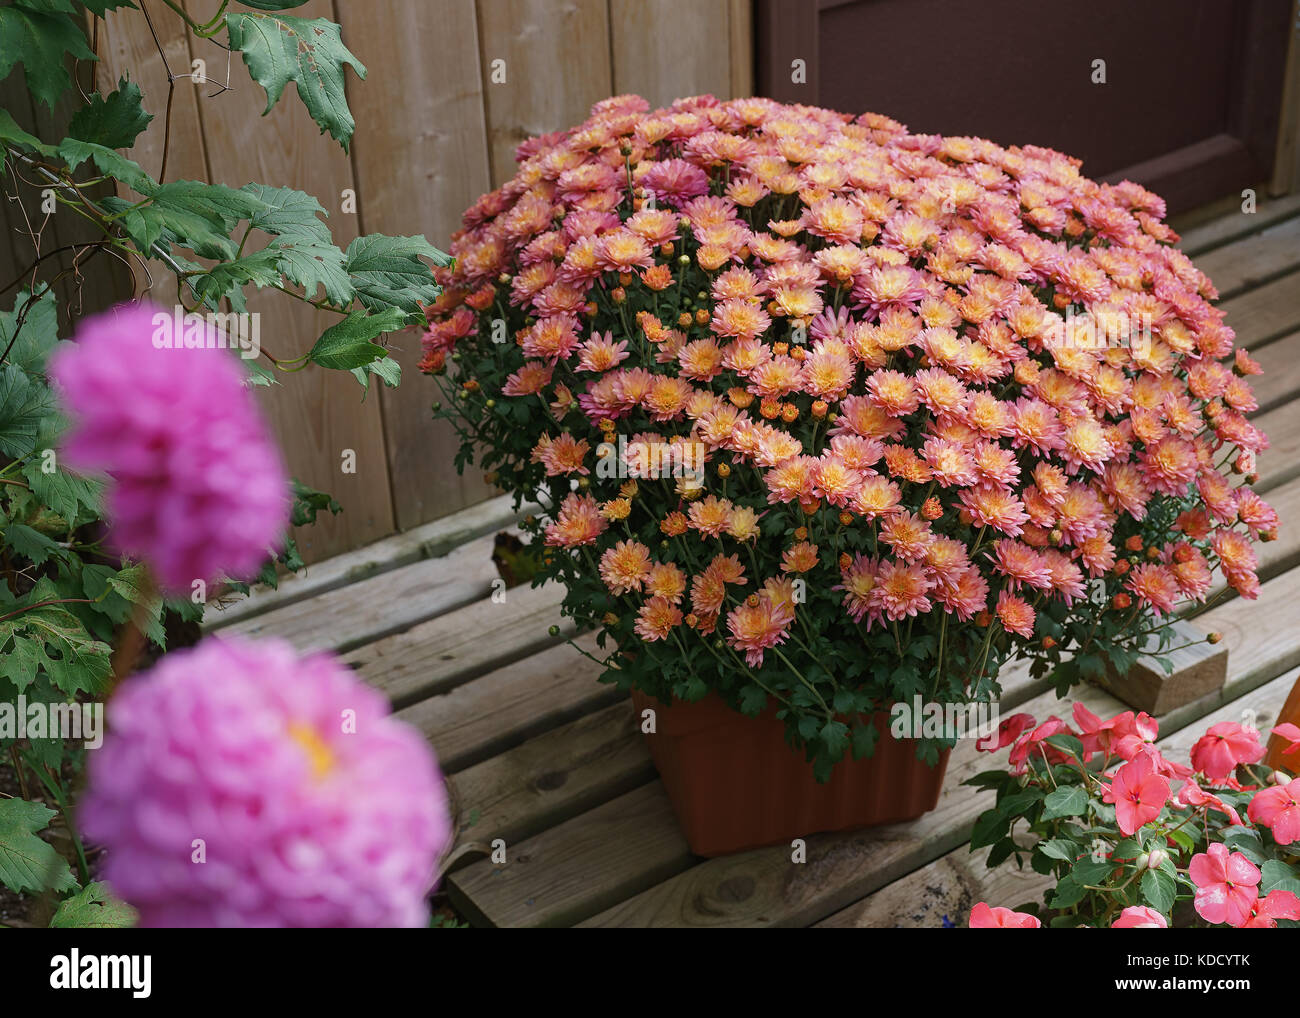 Pink orange mum plant on a wooden deck in the garden. Stock Photo